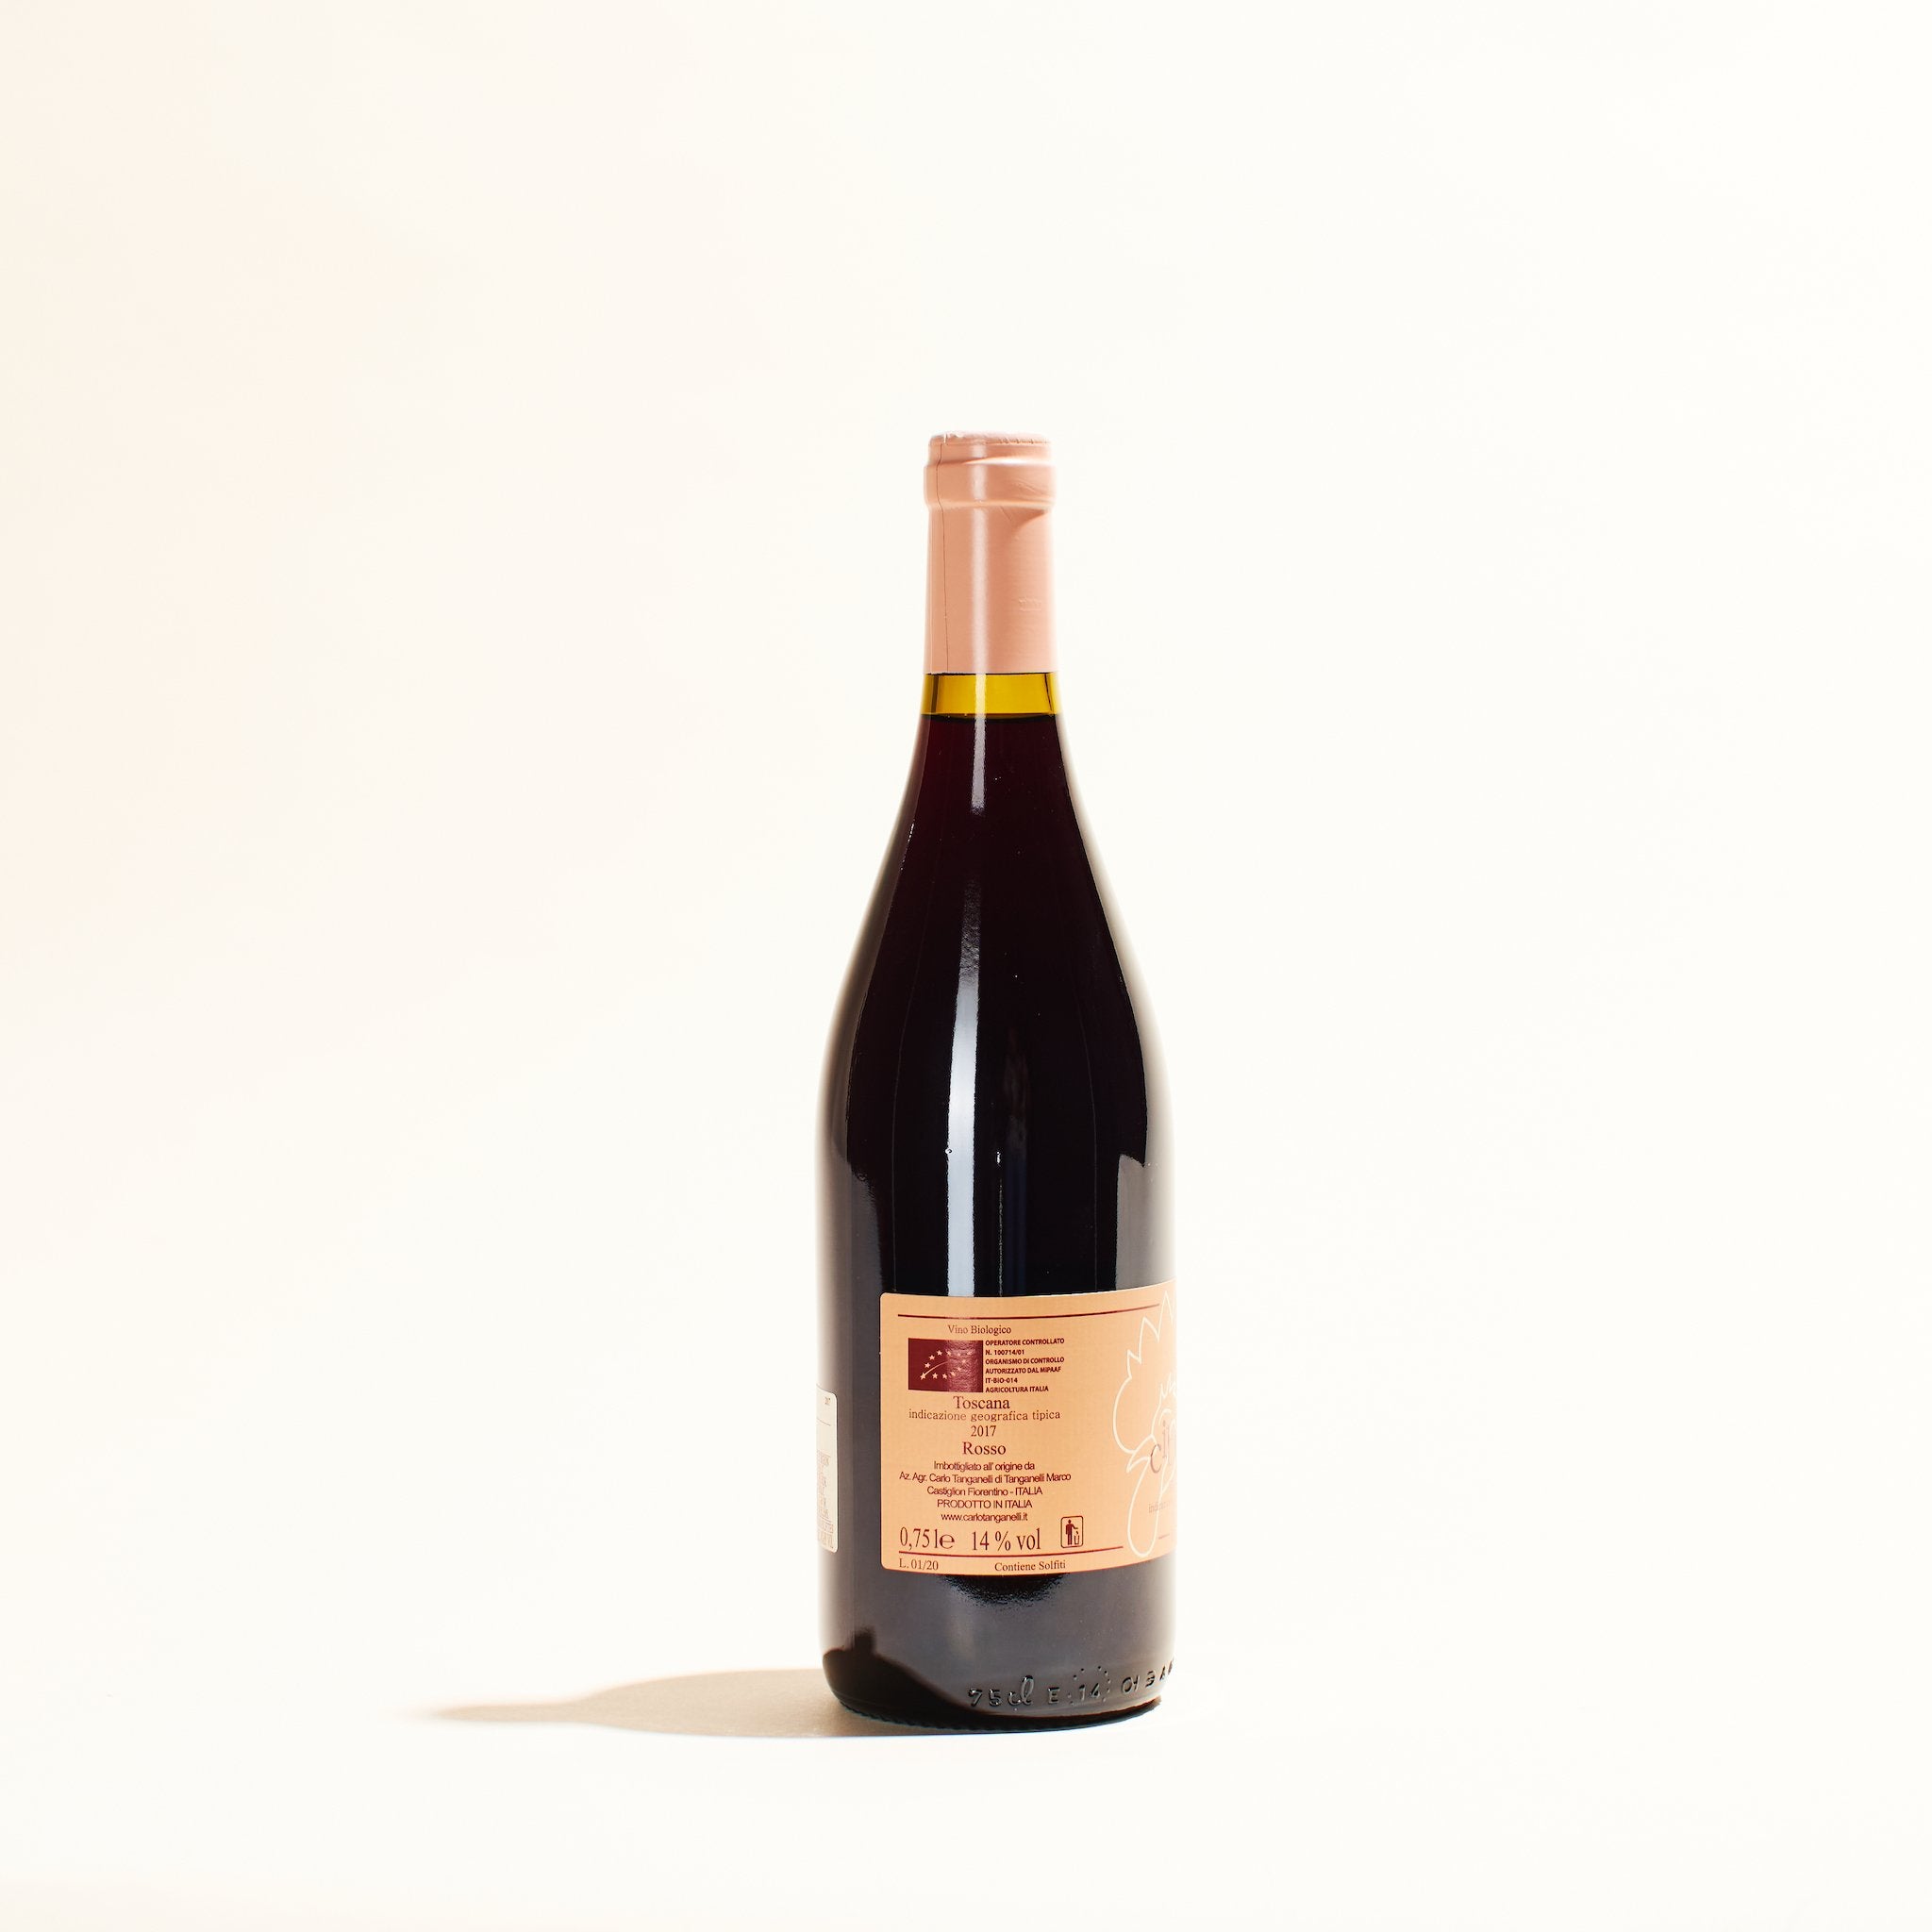 cibreo by tanganelli natural red wine tuscany italy